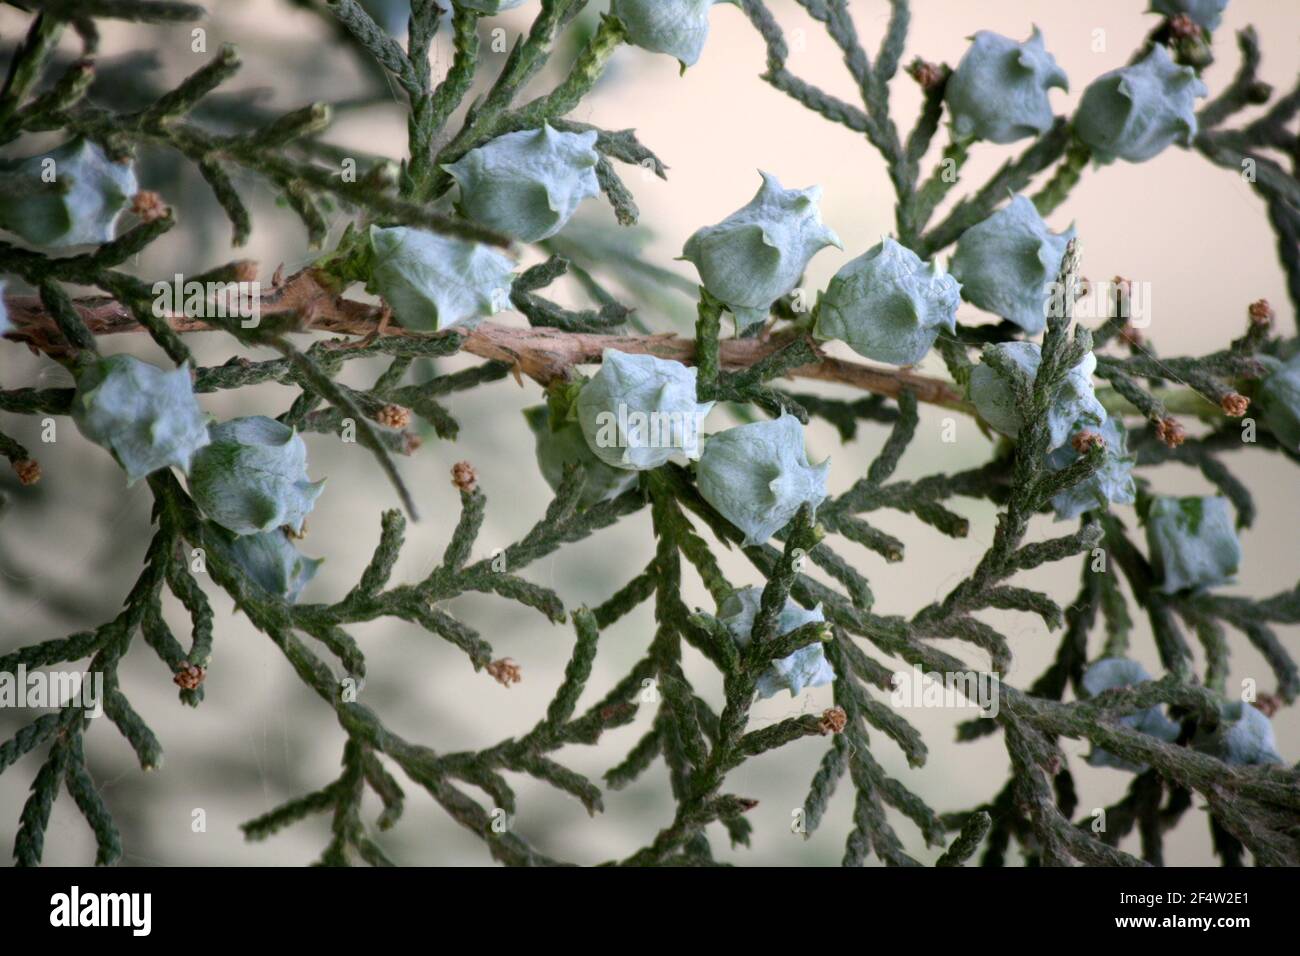 Oriental thuja (Platycladus orientalis) with immature seed cones : (pix SShukla) Stock Photo